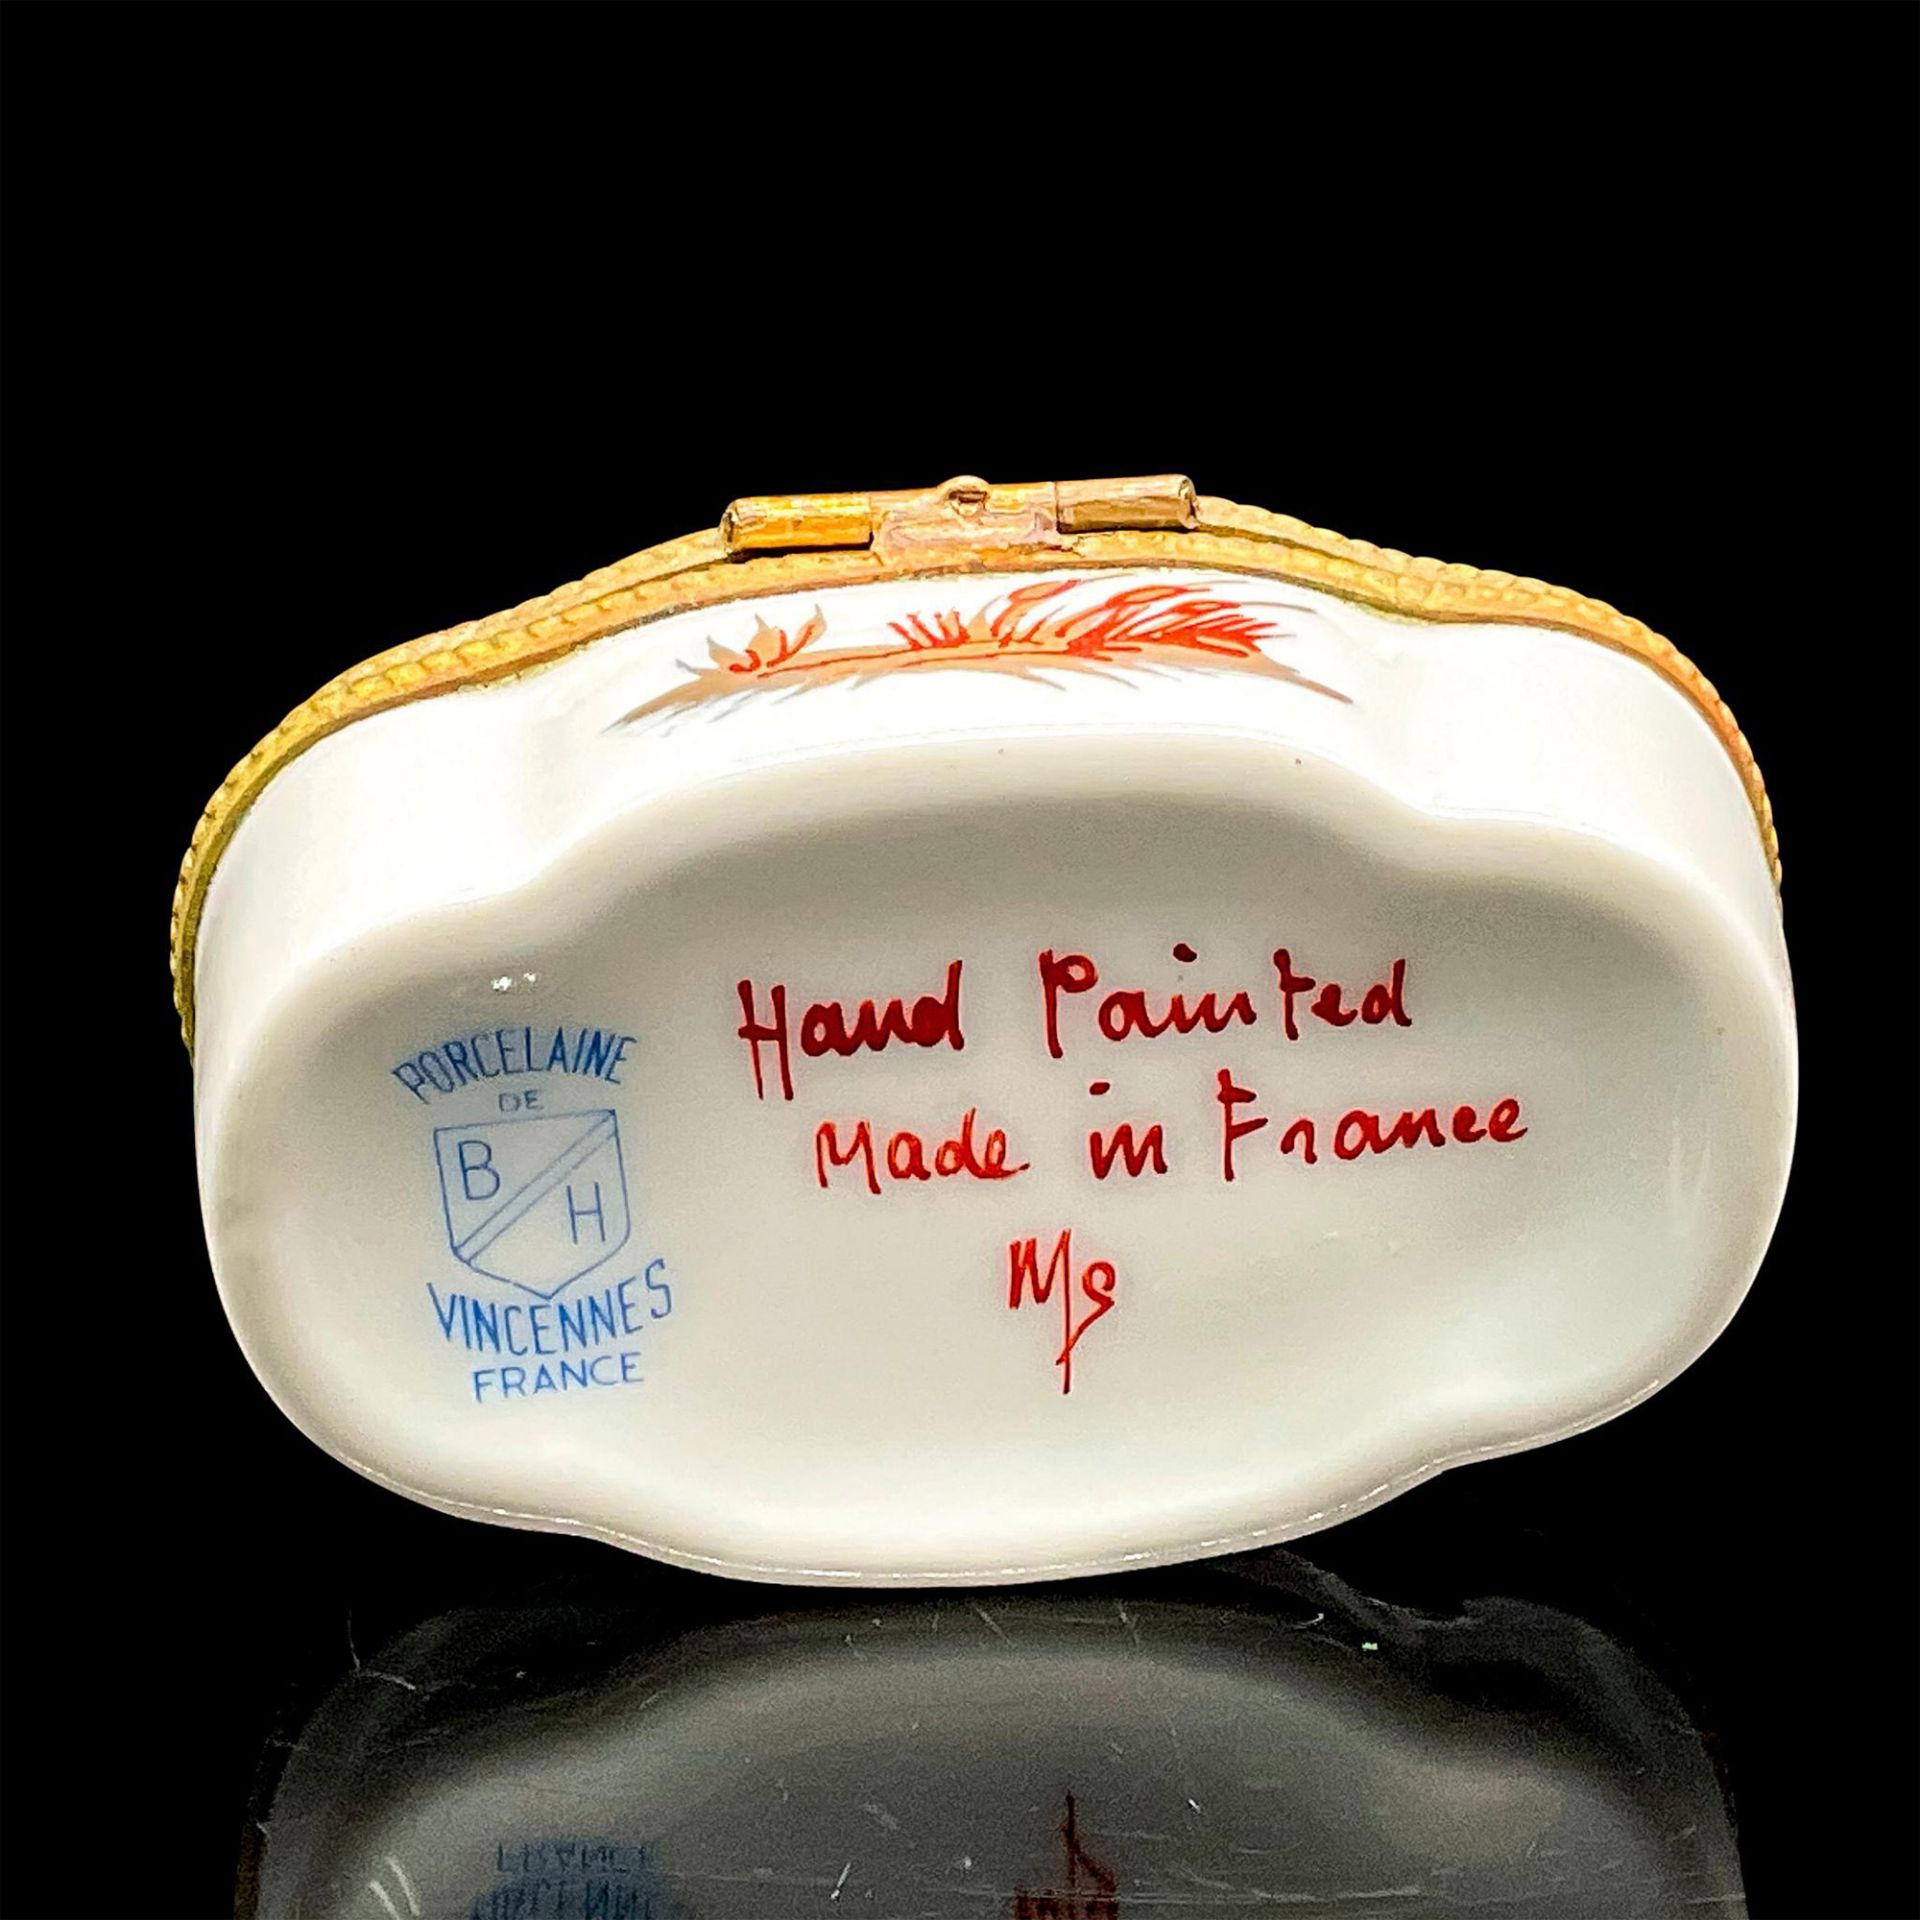 BH Porcelain of Vincennes France Hand Painted Jewelry Box - Bild 3 aus 3